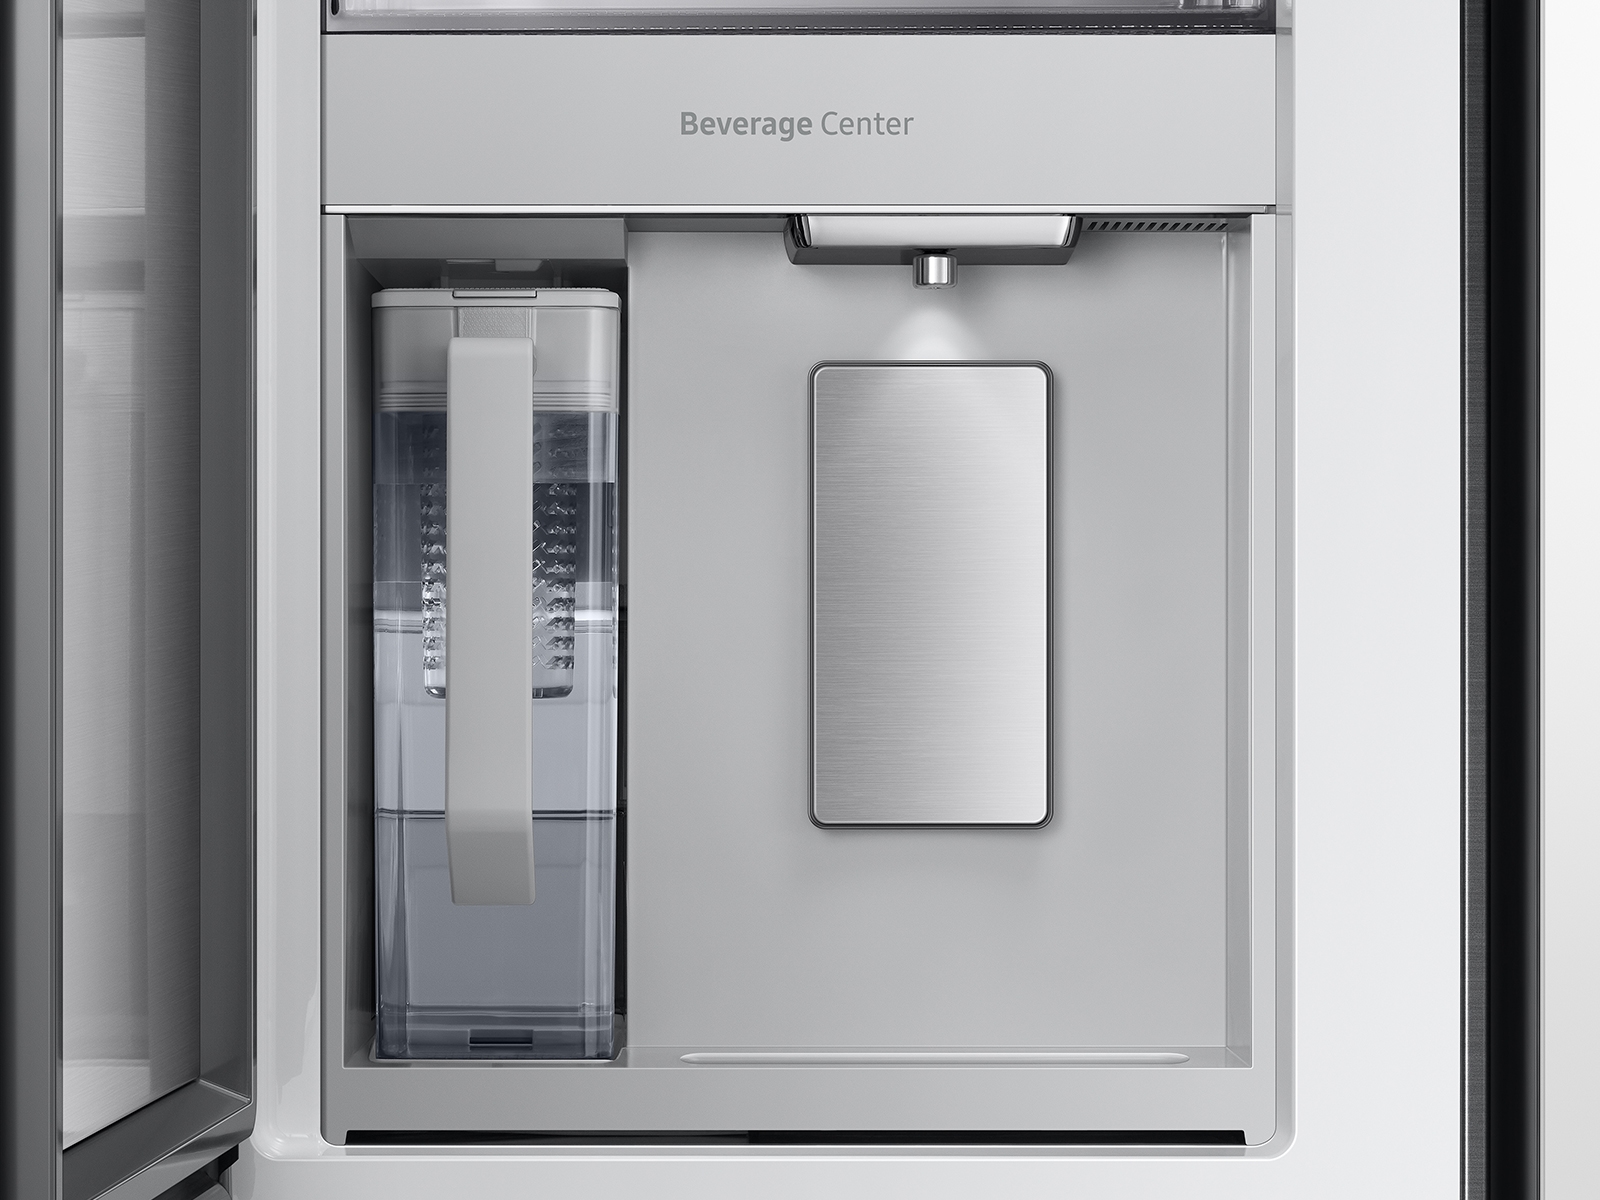 Samsung - Bespoke 23 Cu. ft. Counter Depth 4-Door French Door Refrigerator with Beverage Center - White Glass